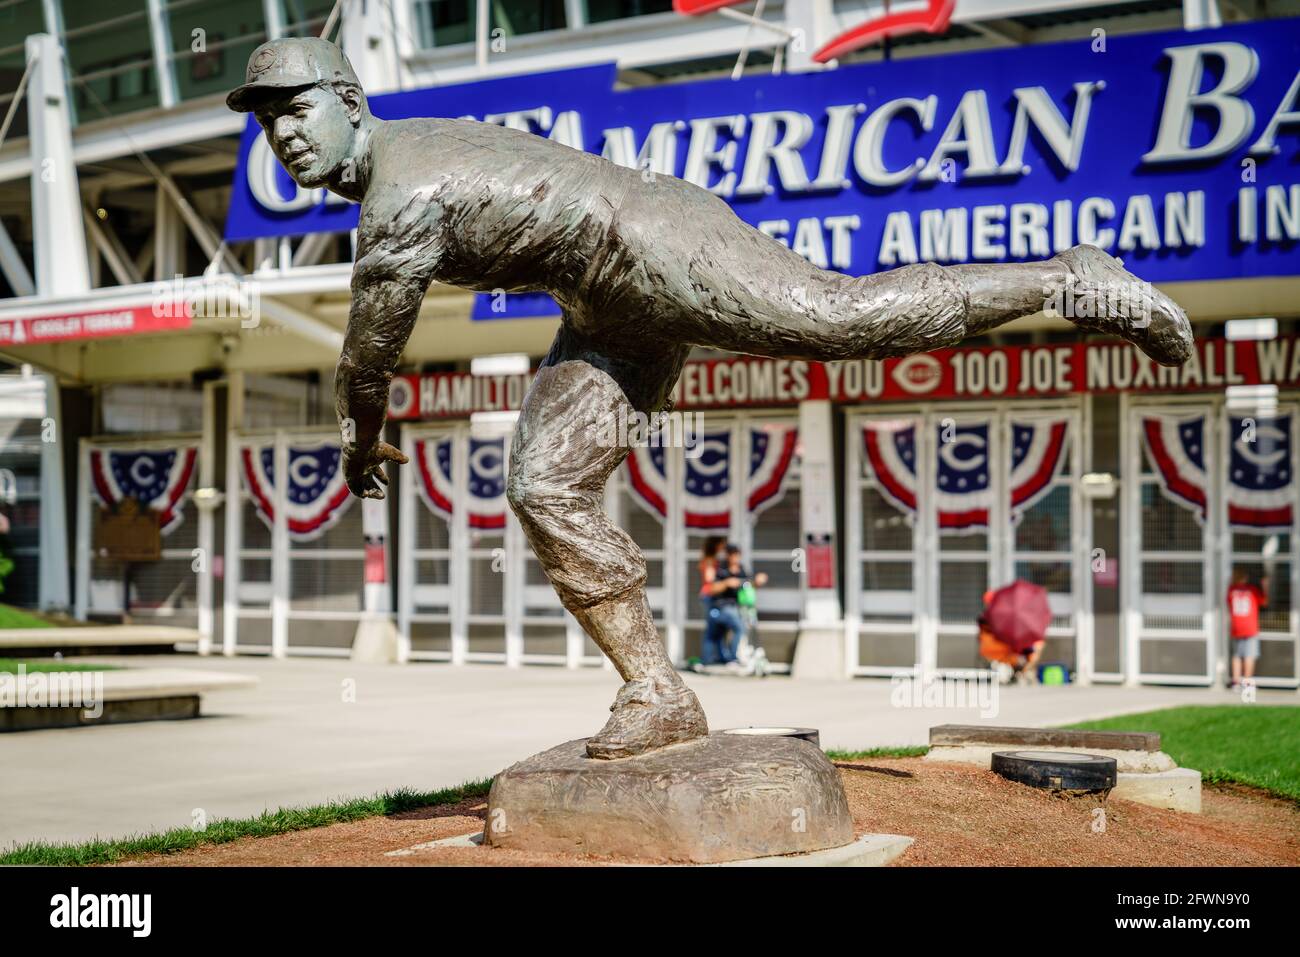 Cincinnati, Ohio, August 29, 2020: Joe Nuxhall statue in front of the Great American Ball Park stadium, the home to Cincinnati Reds baseball team Stock Photo